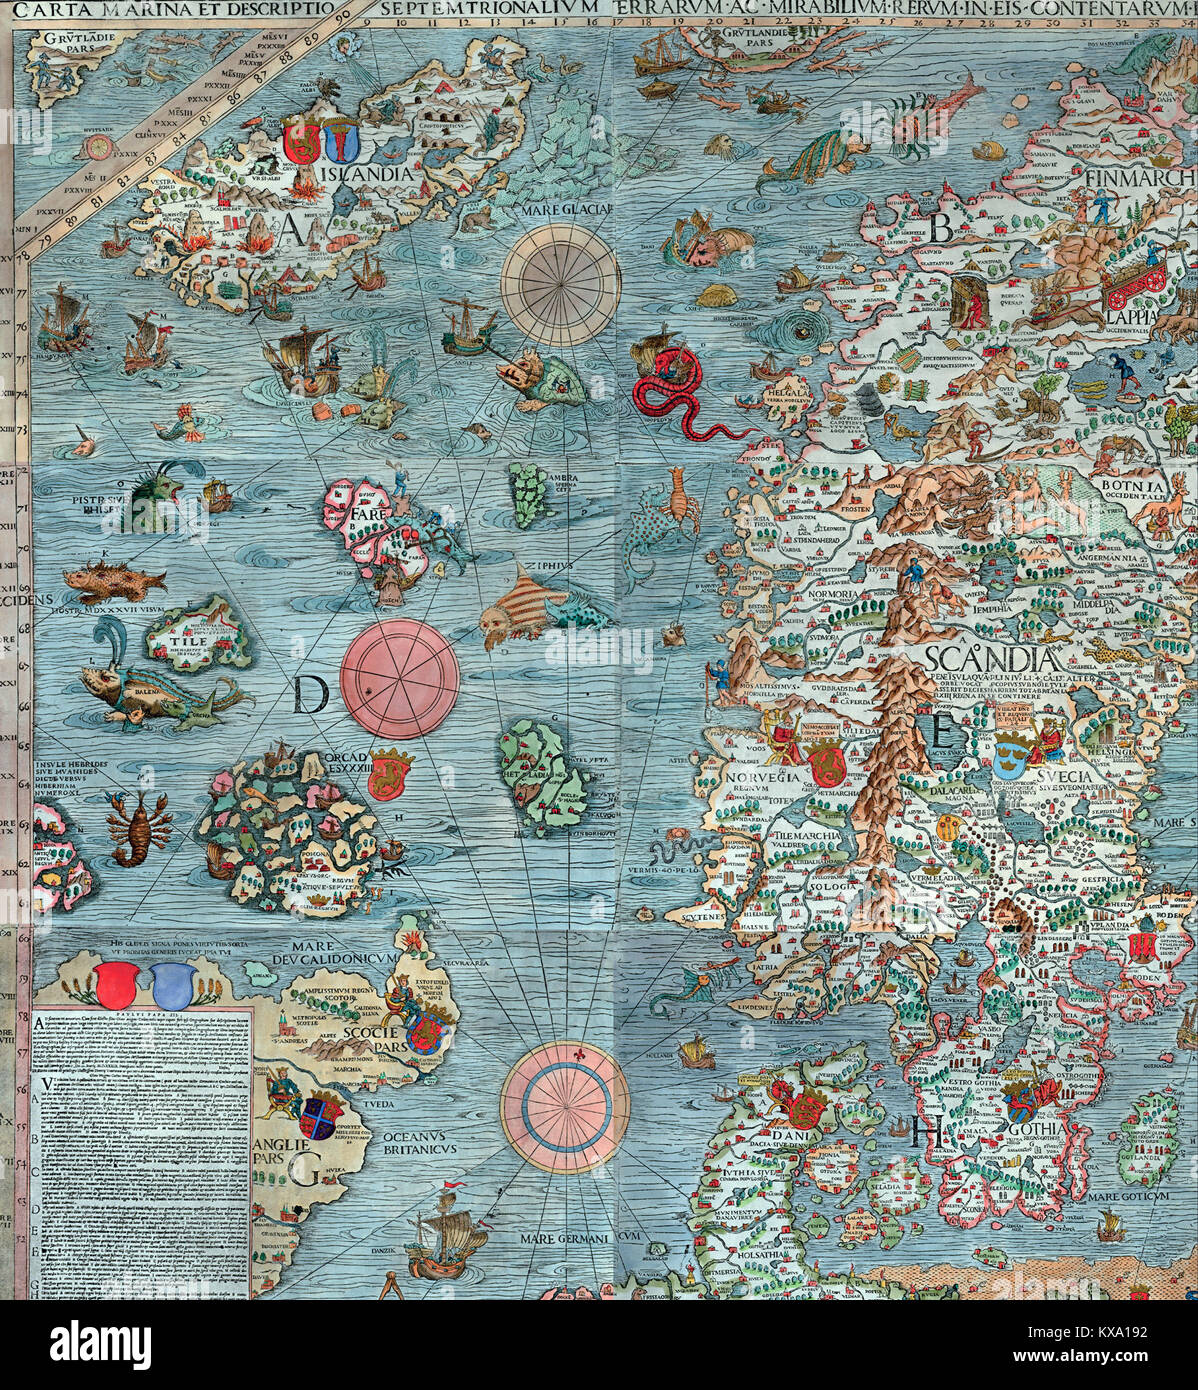 Mapa de Escandinavia Foto de stock